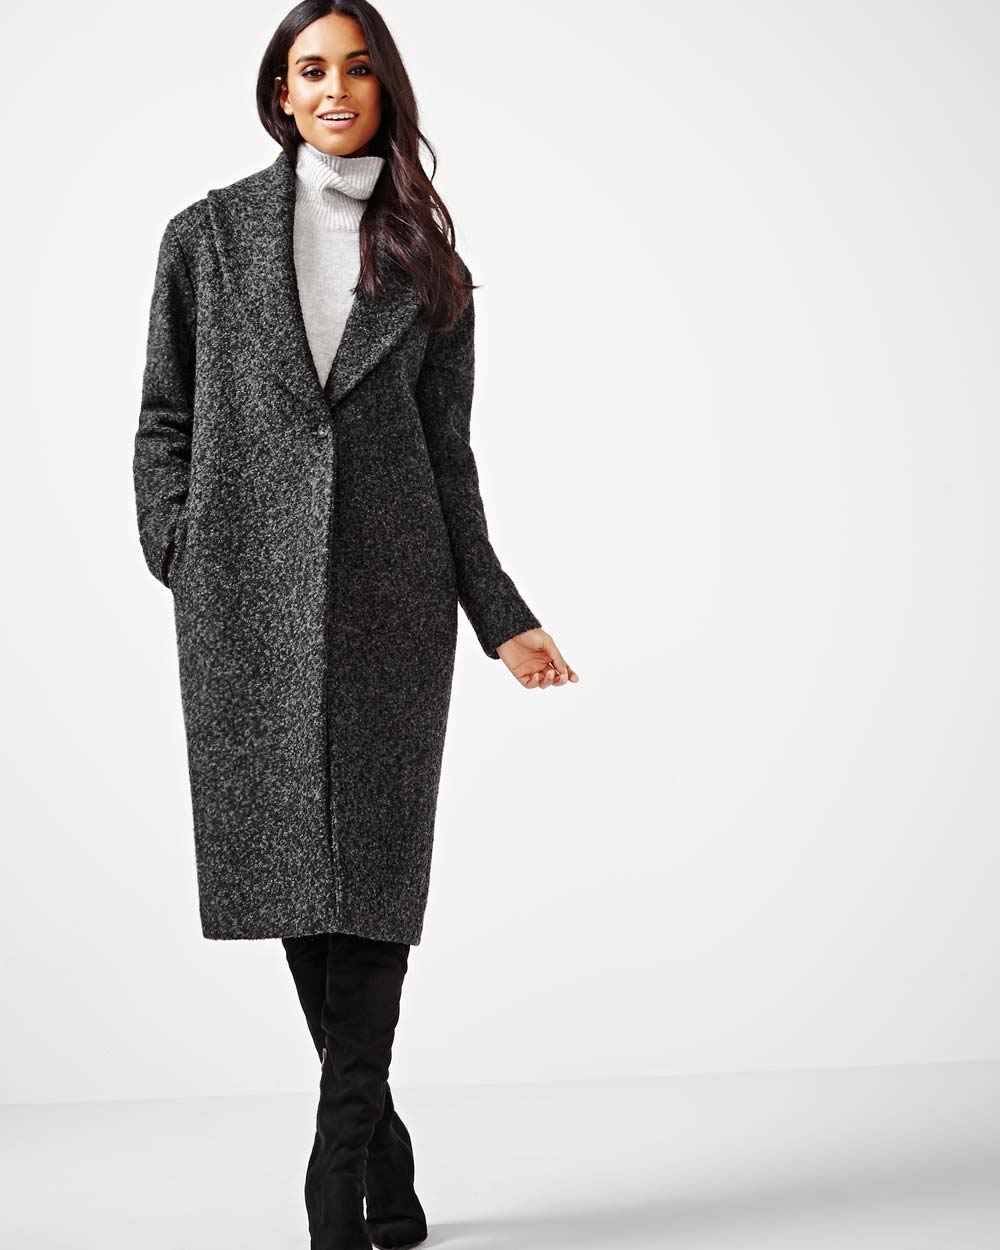 Wool-blend duster coat | RW&CO.